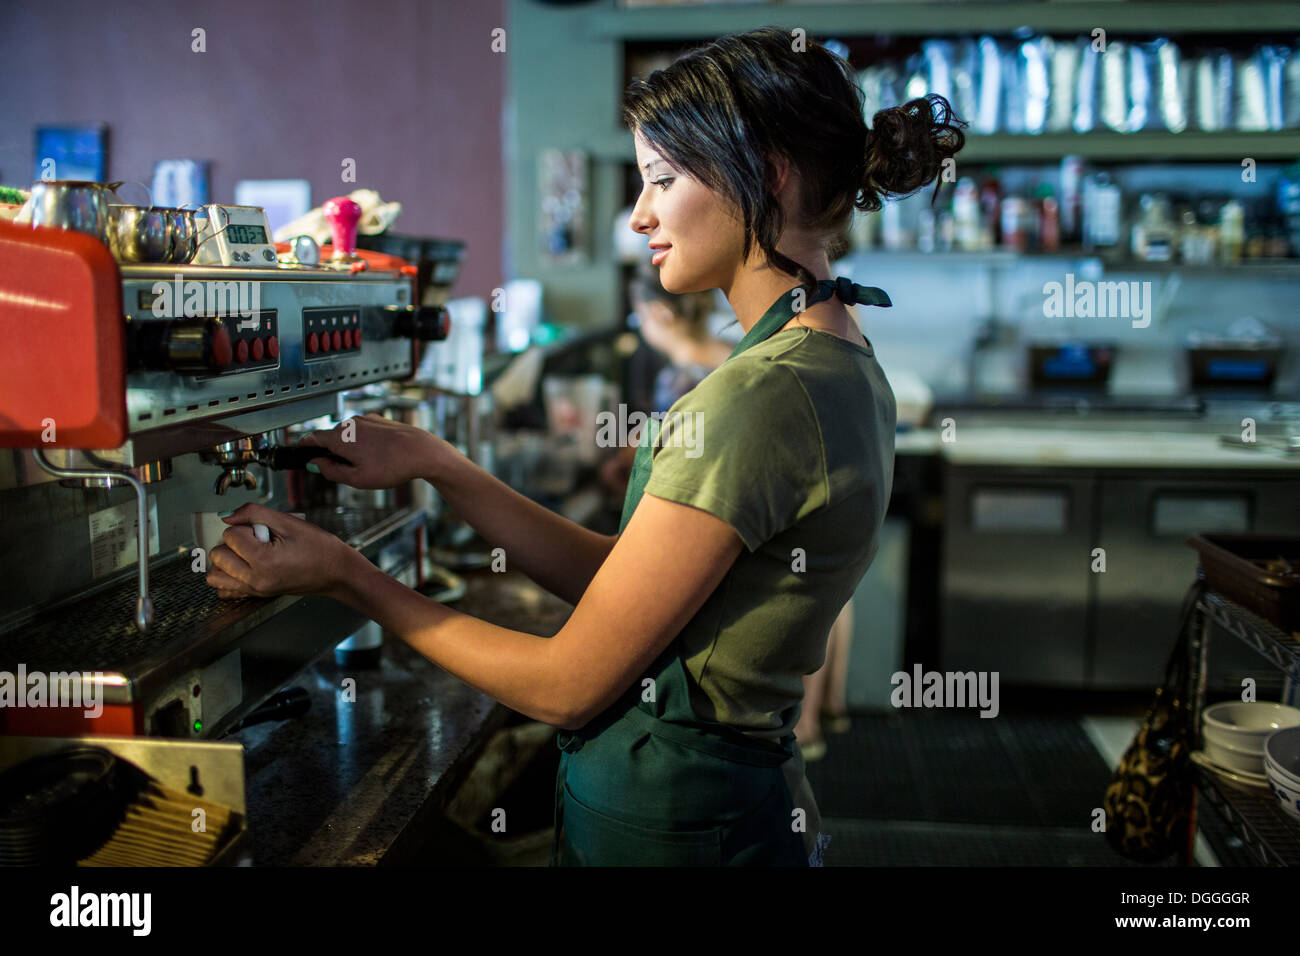 Teenage waitress preparing coffee in cafe kitchen Stock Photo